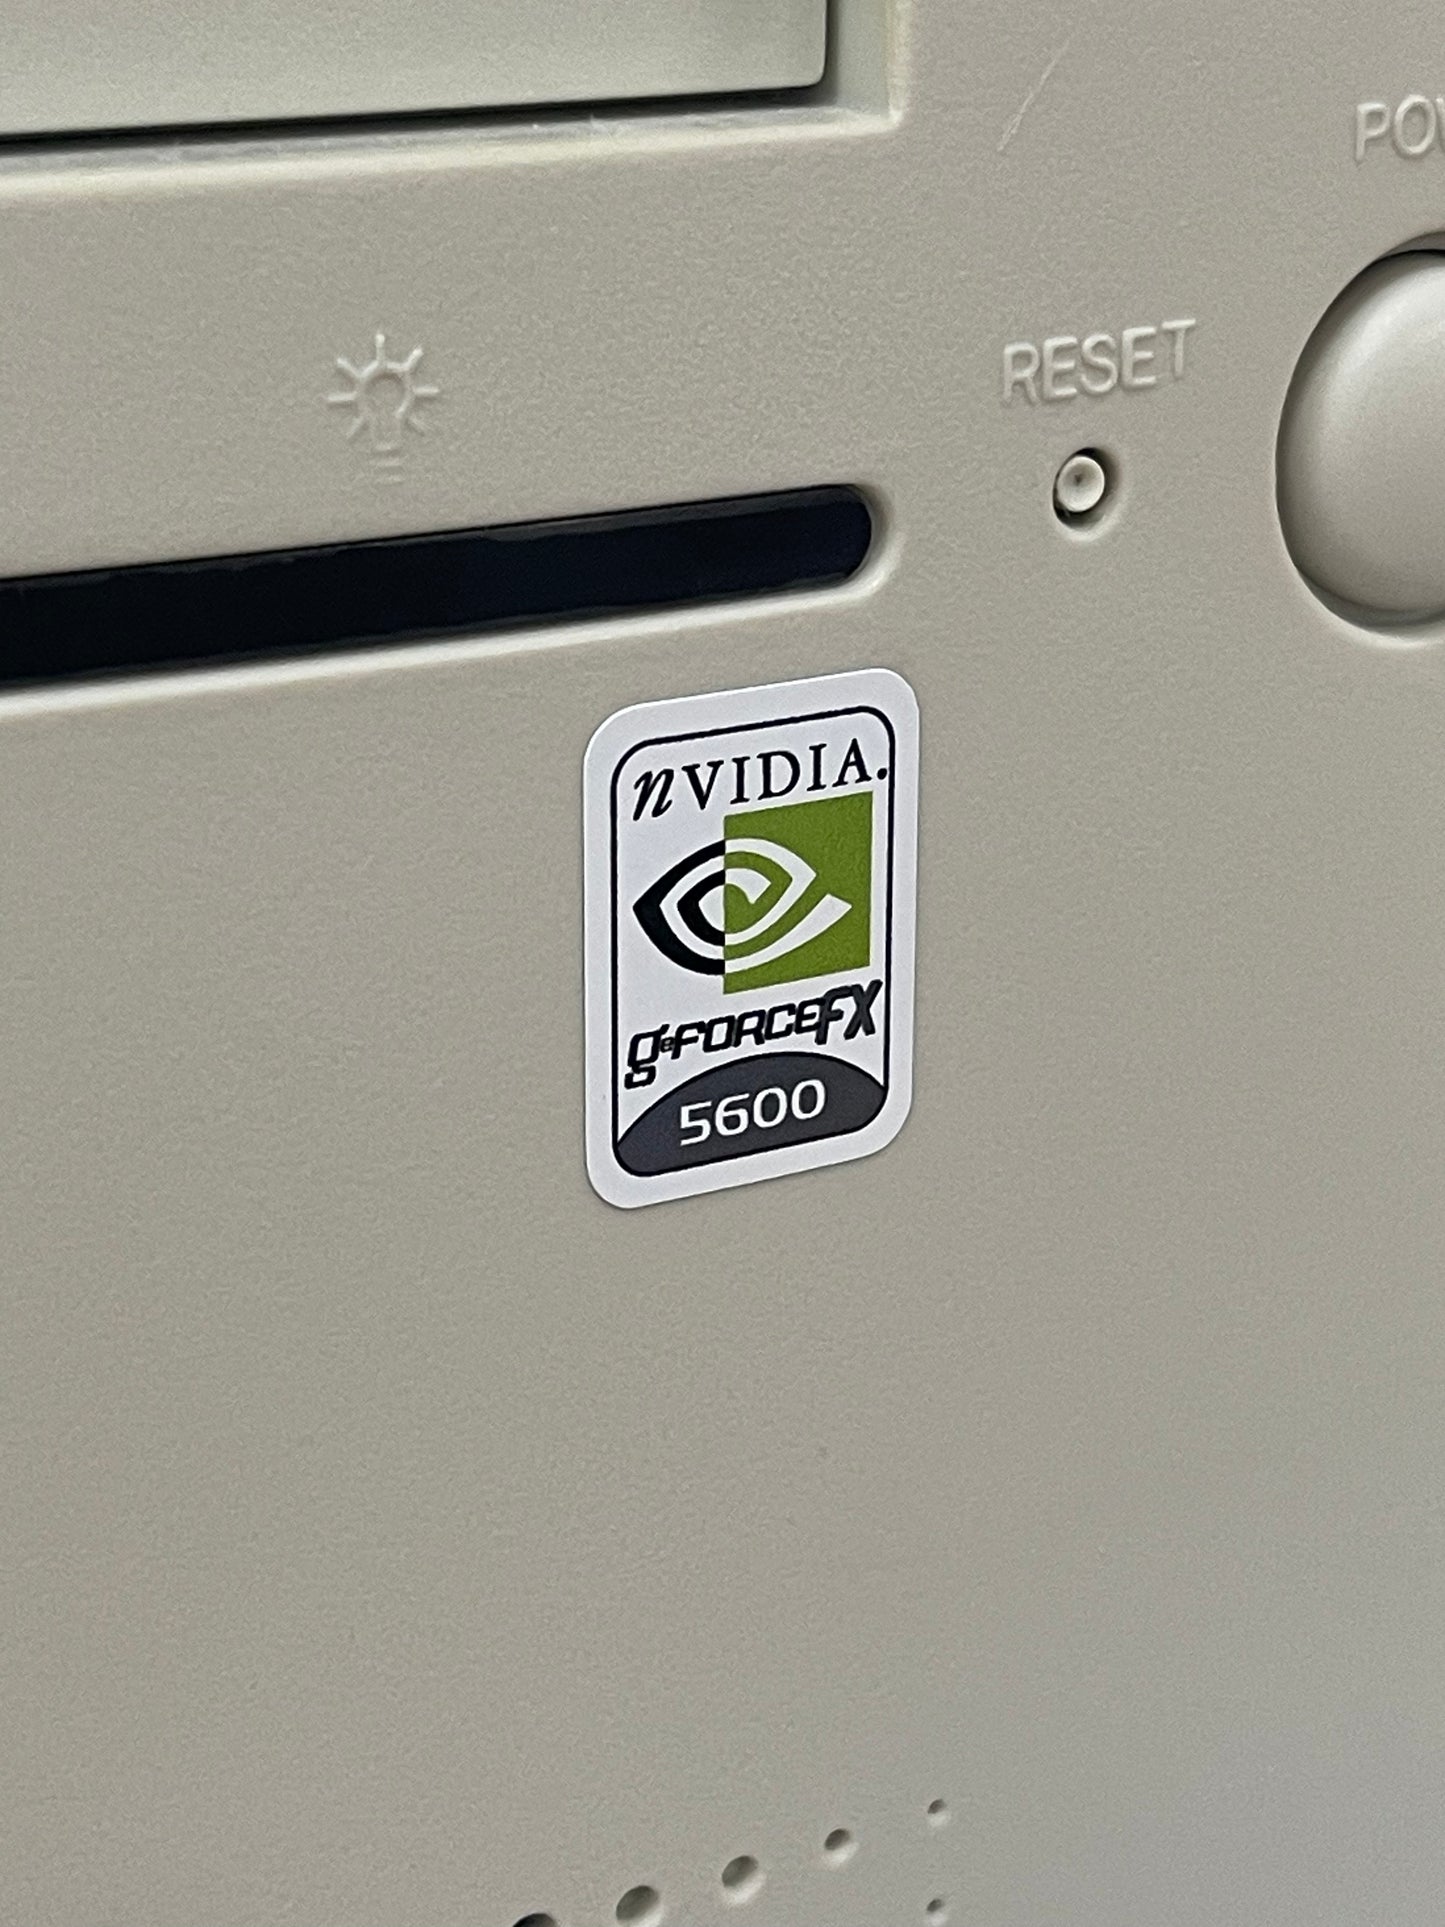 Nvidia Geforce FX 5600 Video Graphics Case Badge Sticker - White